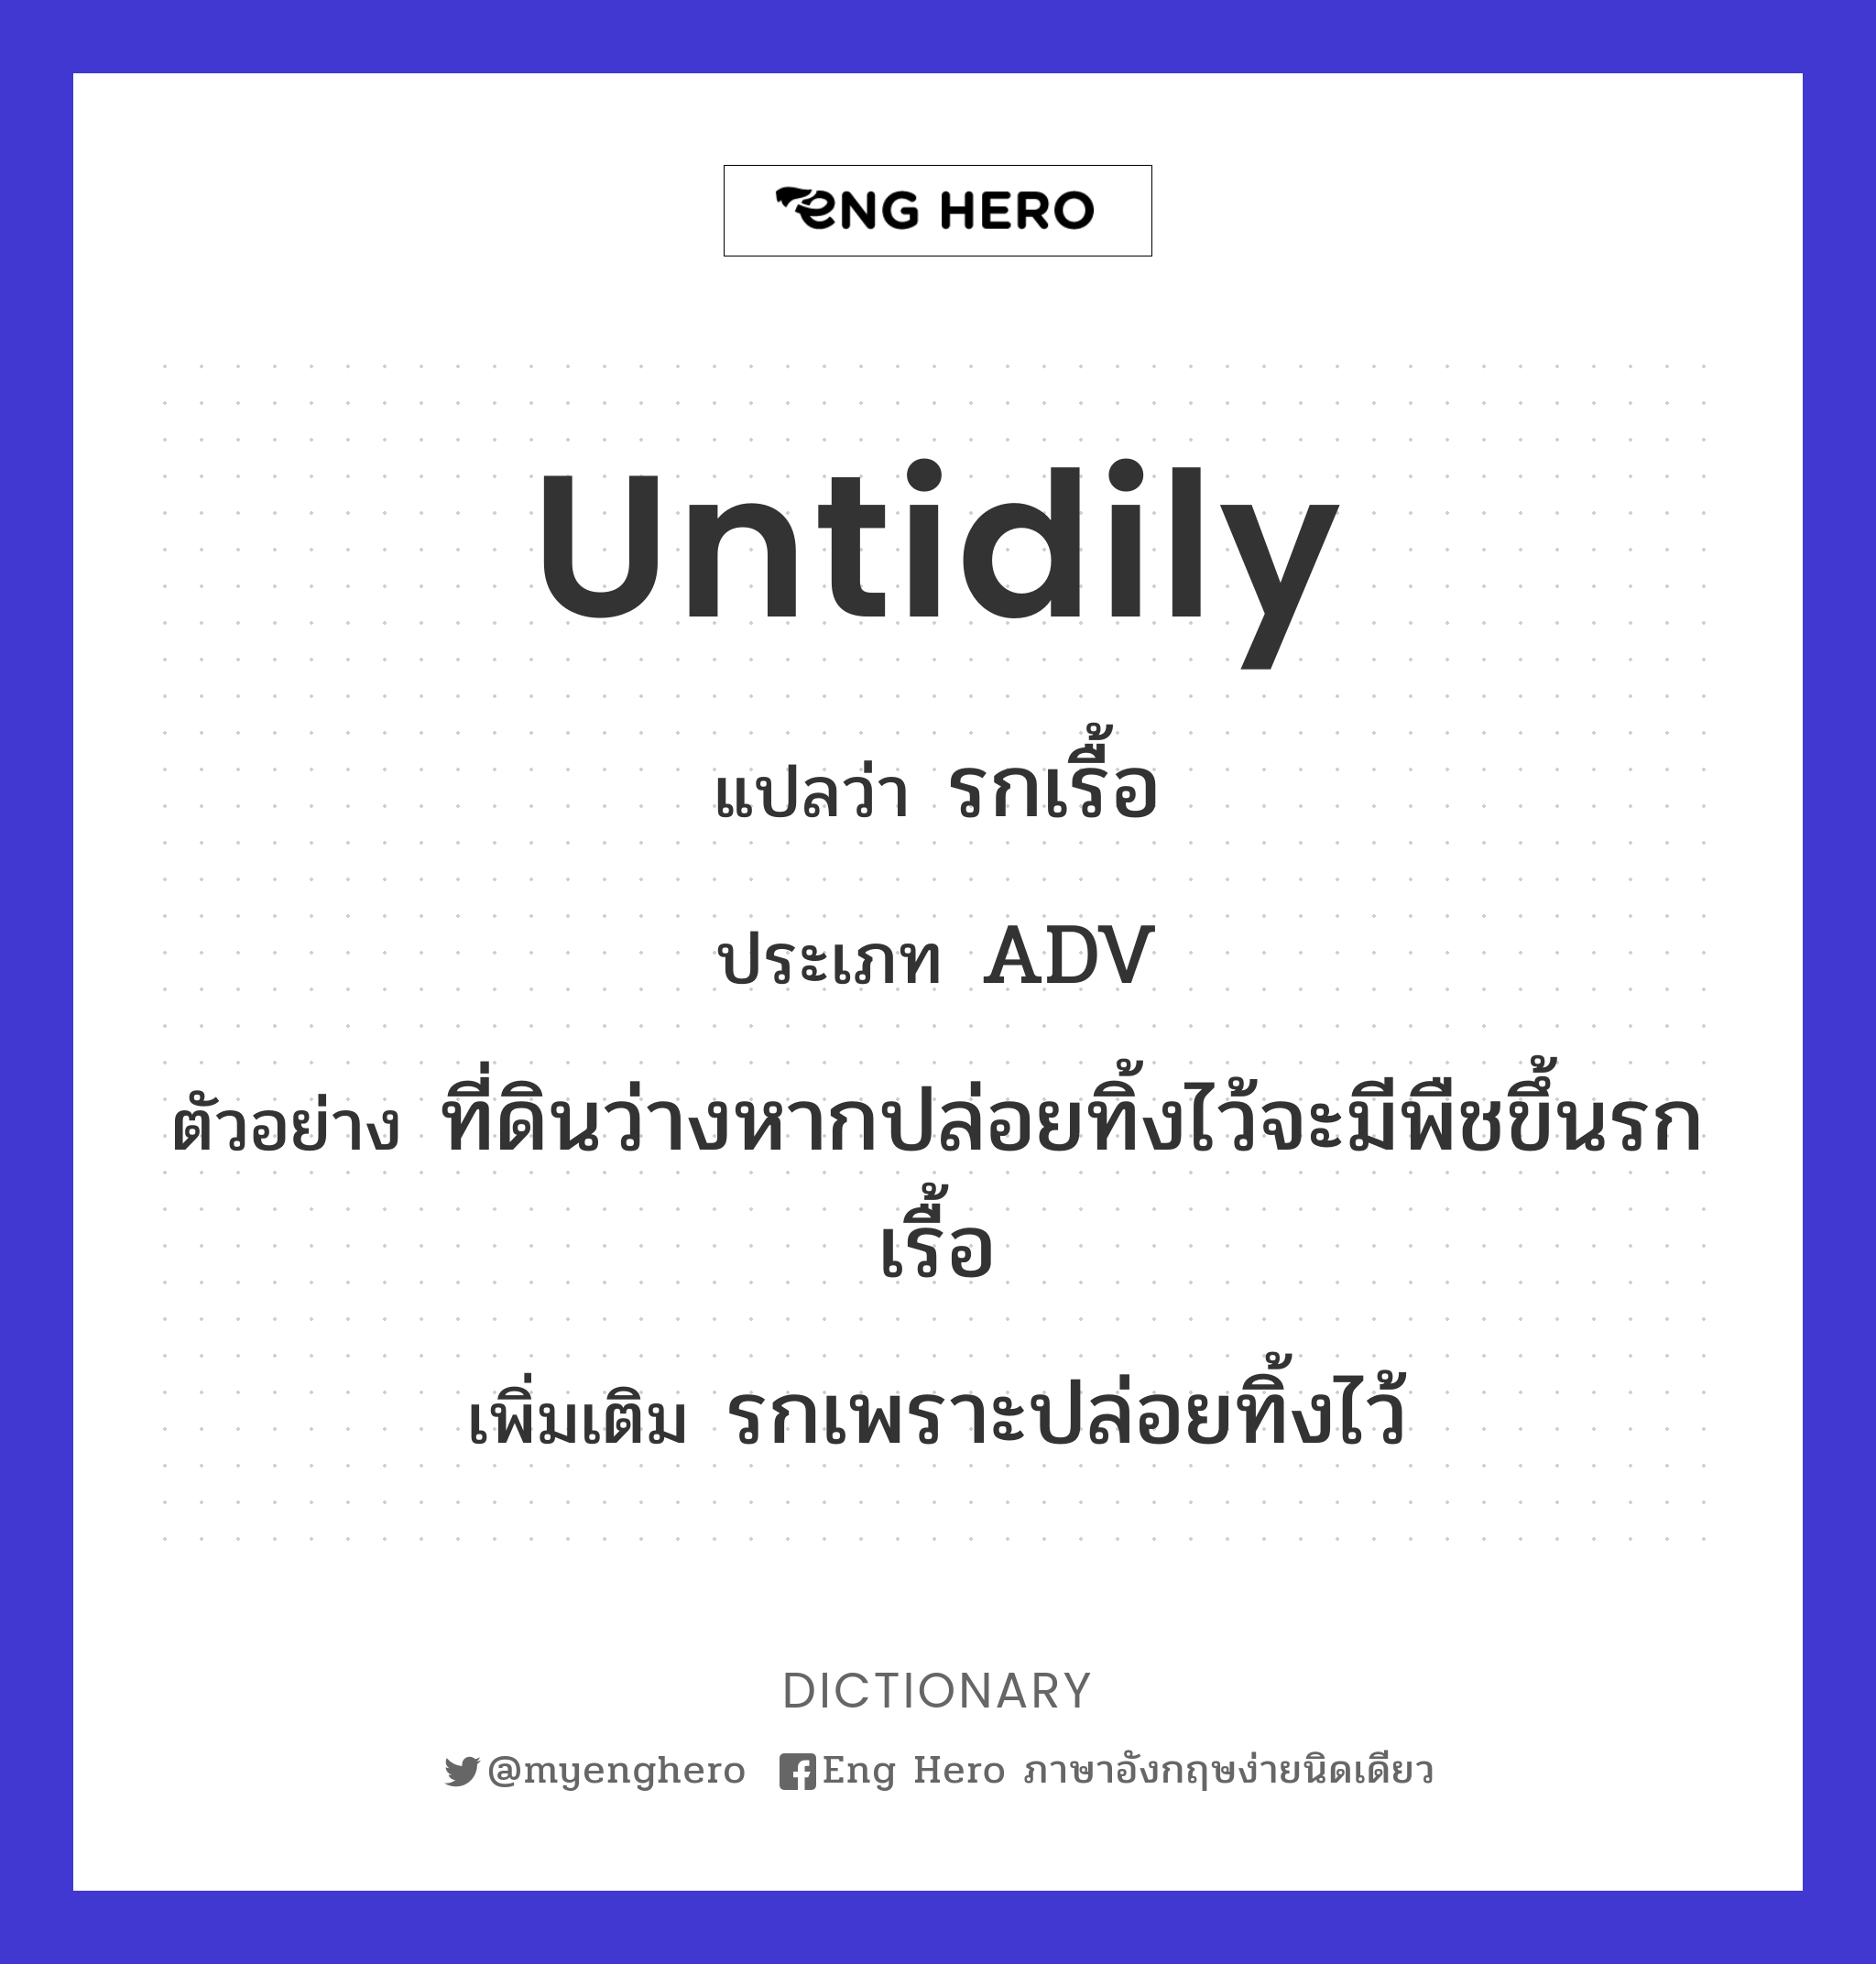 untidily